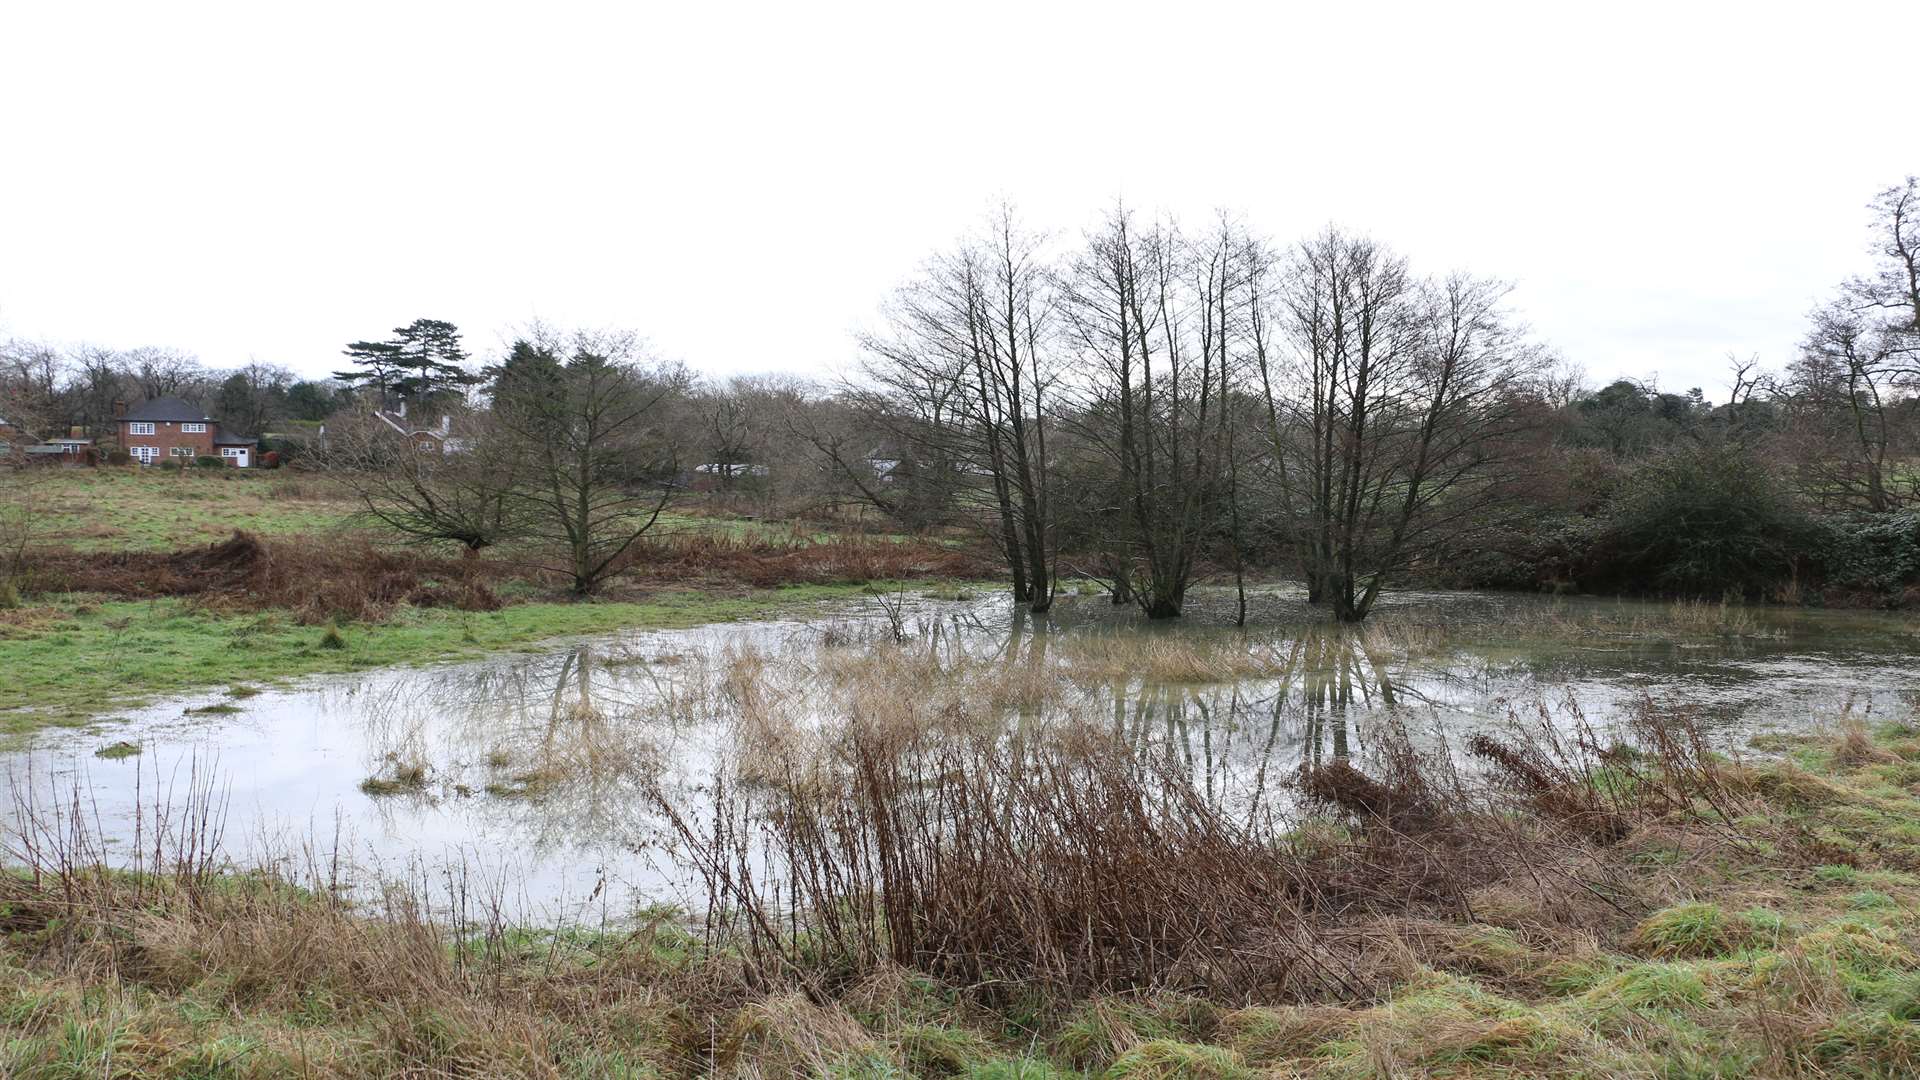 The Lilk Meadow under flood